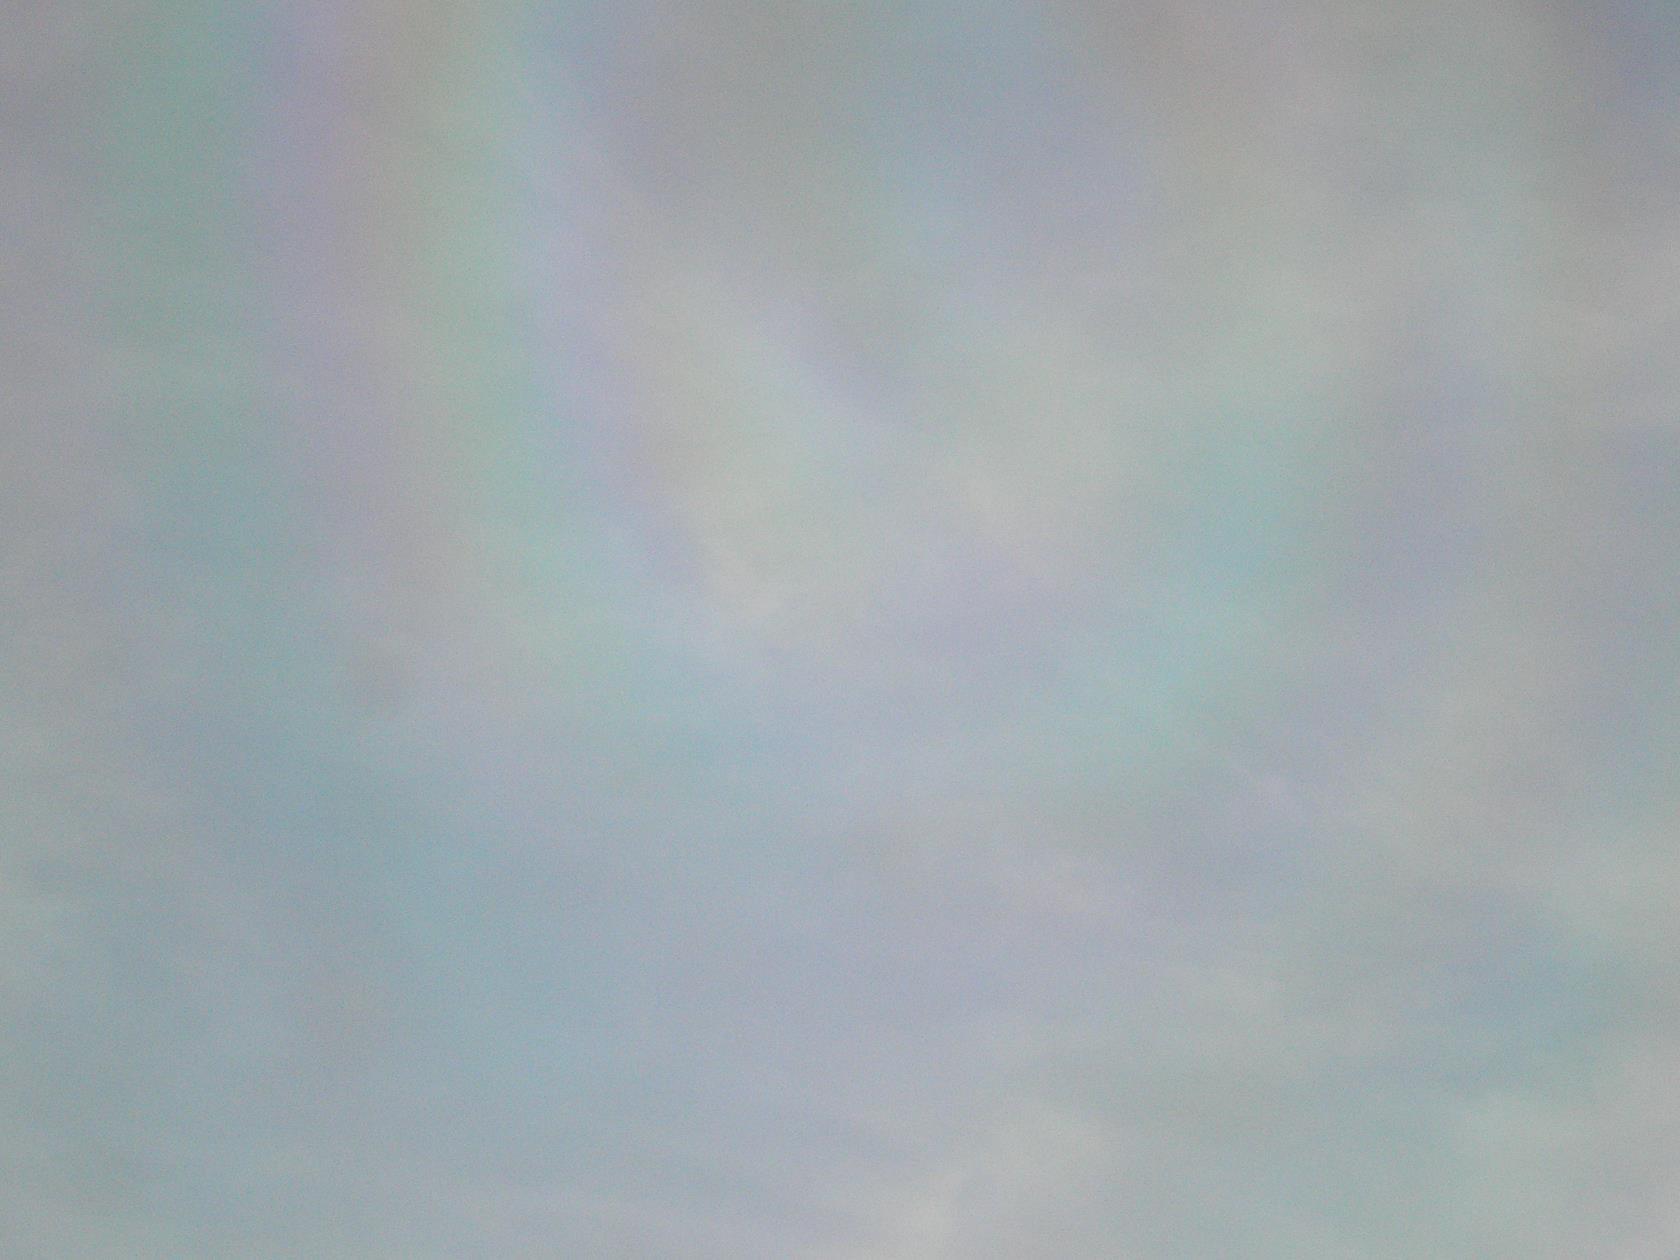  Спиральная радуга в небе (фото и видео) - фото 8